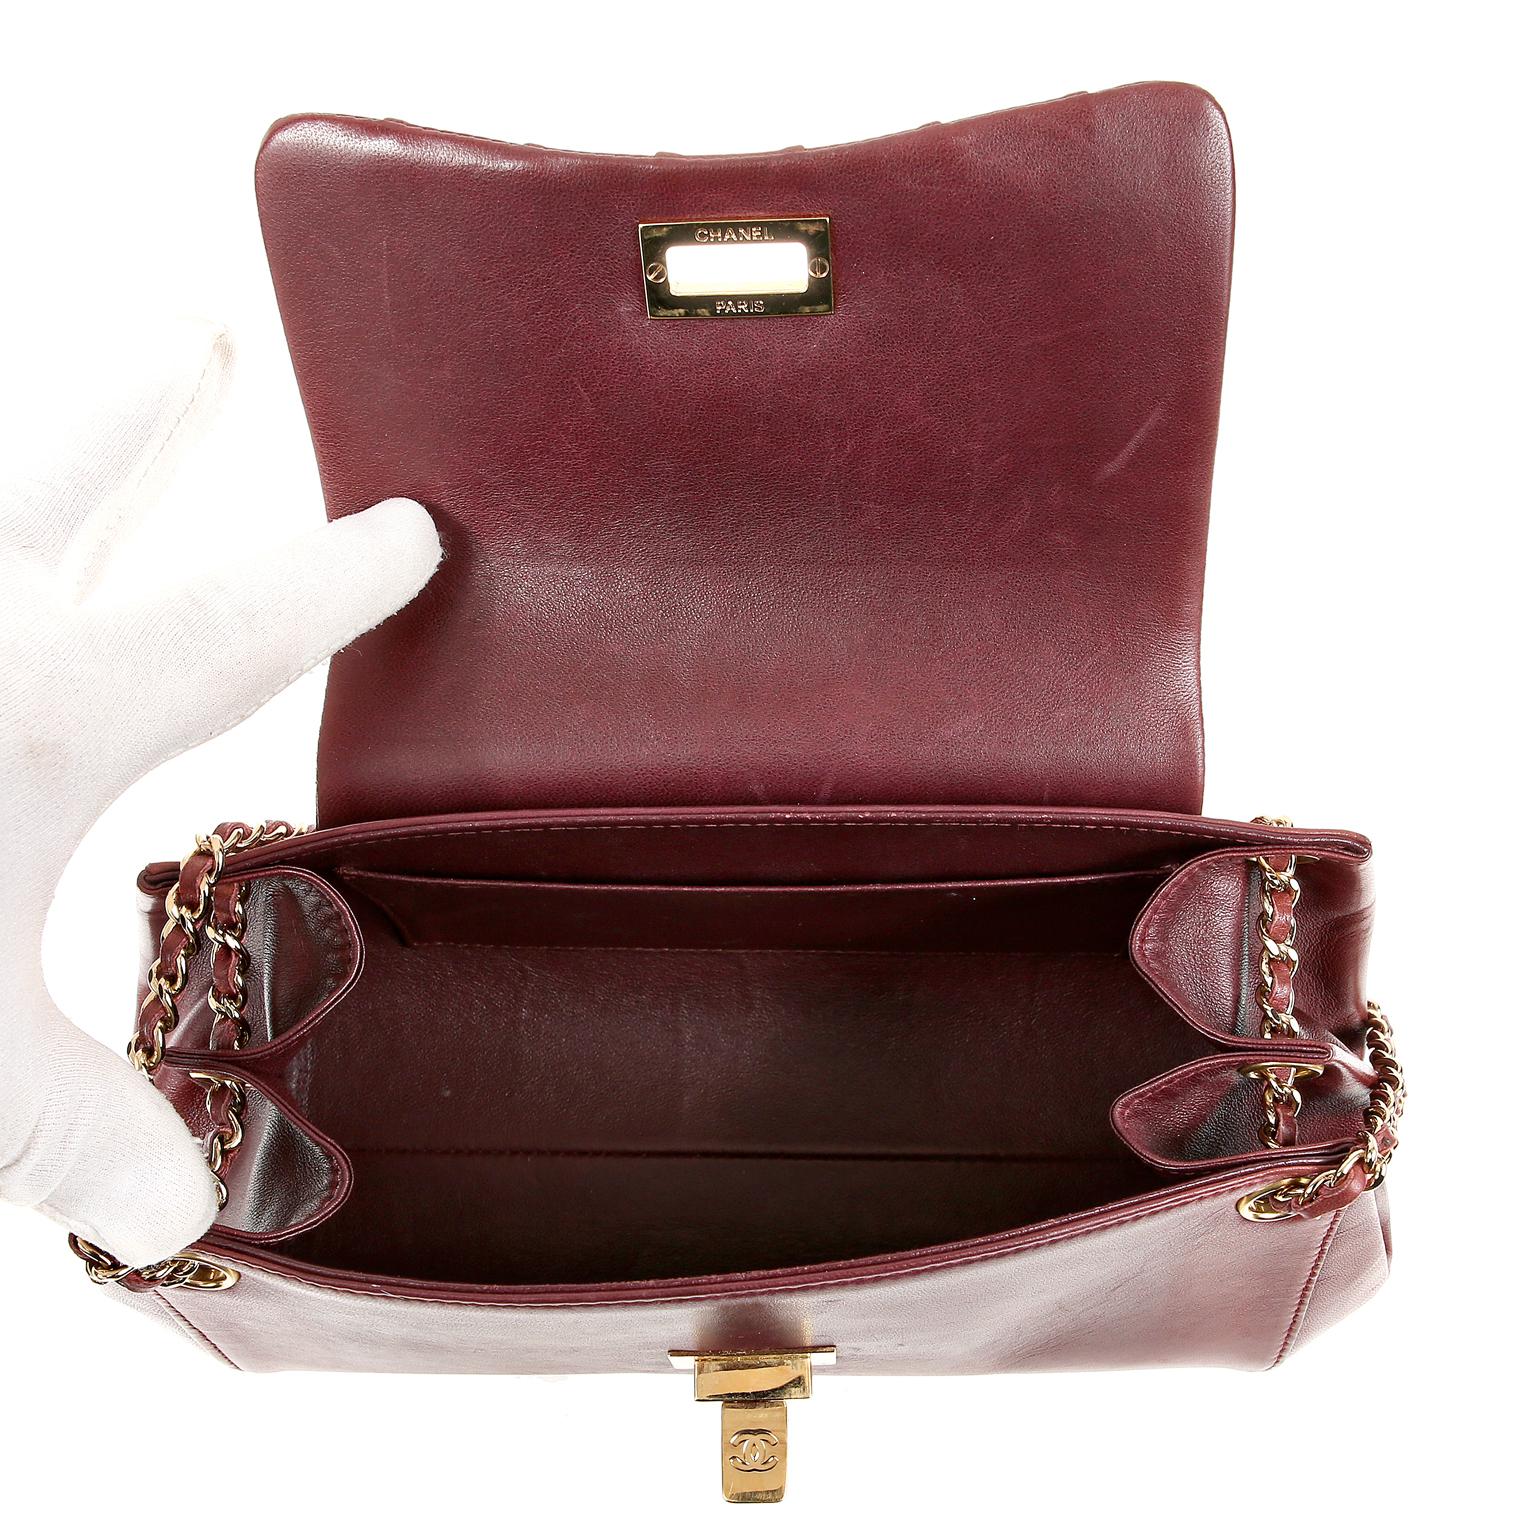 Chanel Burgundy Leather Accordion Flap Bag 2